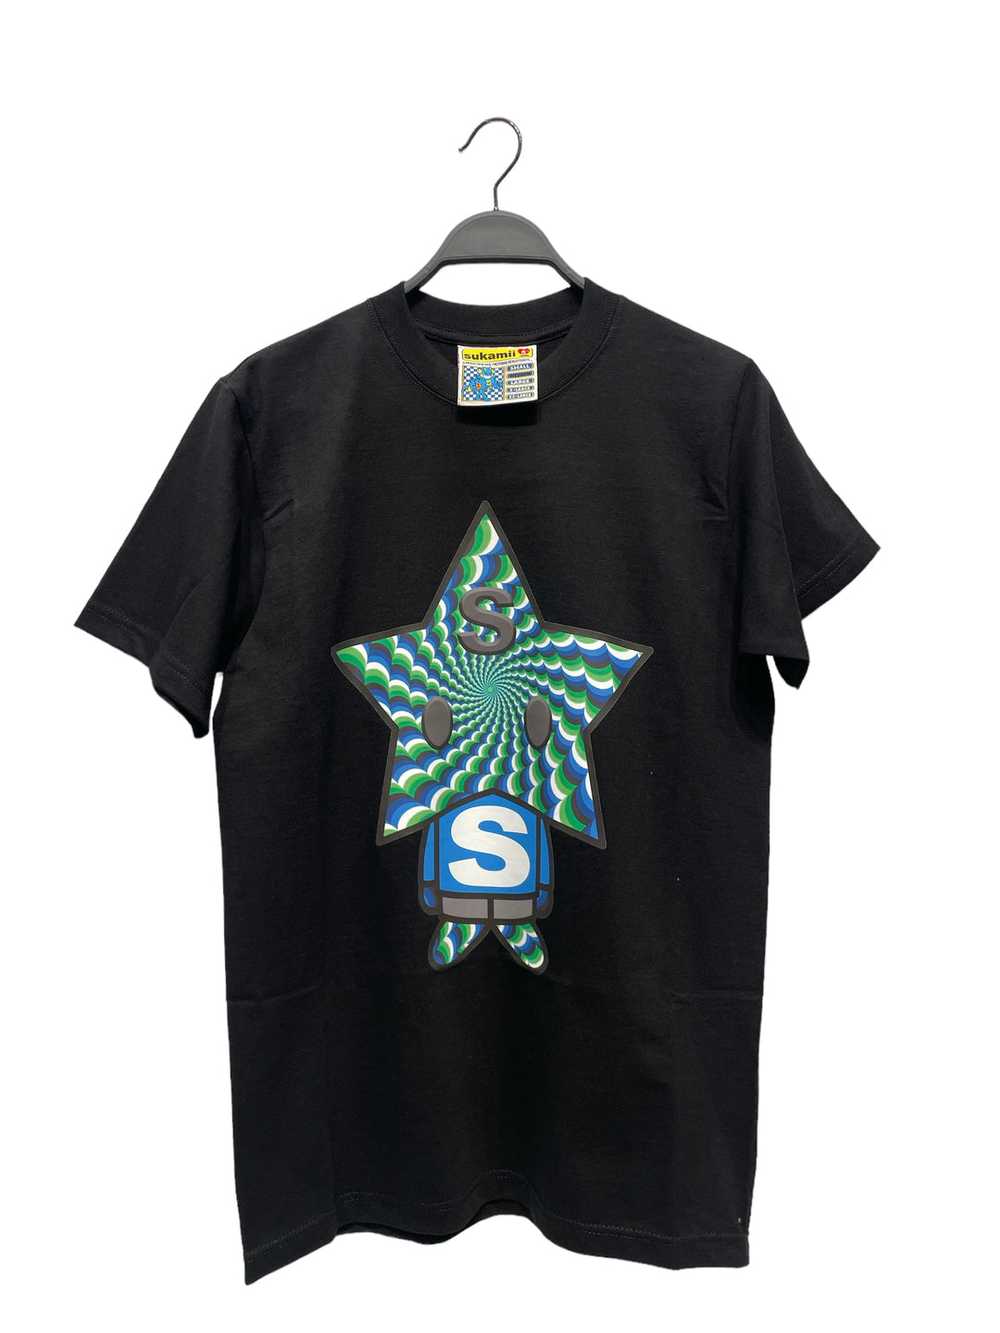 Sukamii 5th Edition/T-Shirt/M/Cotton/BLK/Graphic/ - image 1